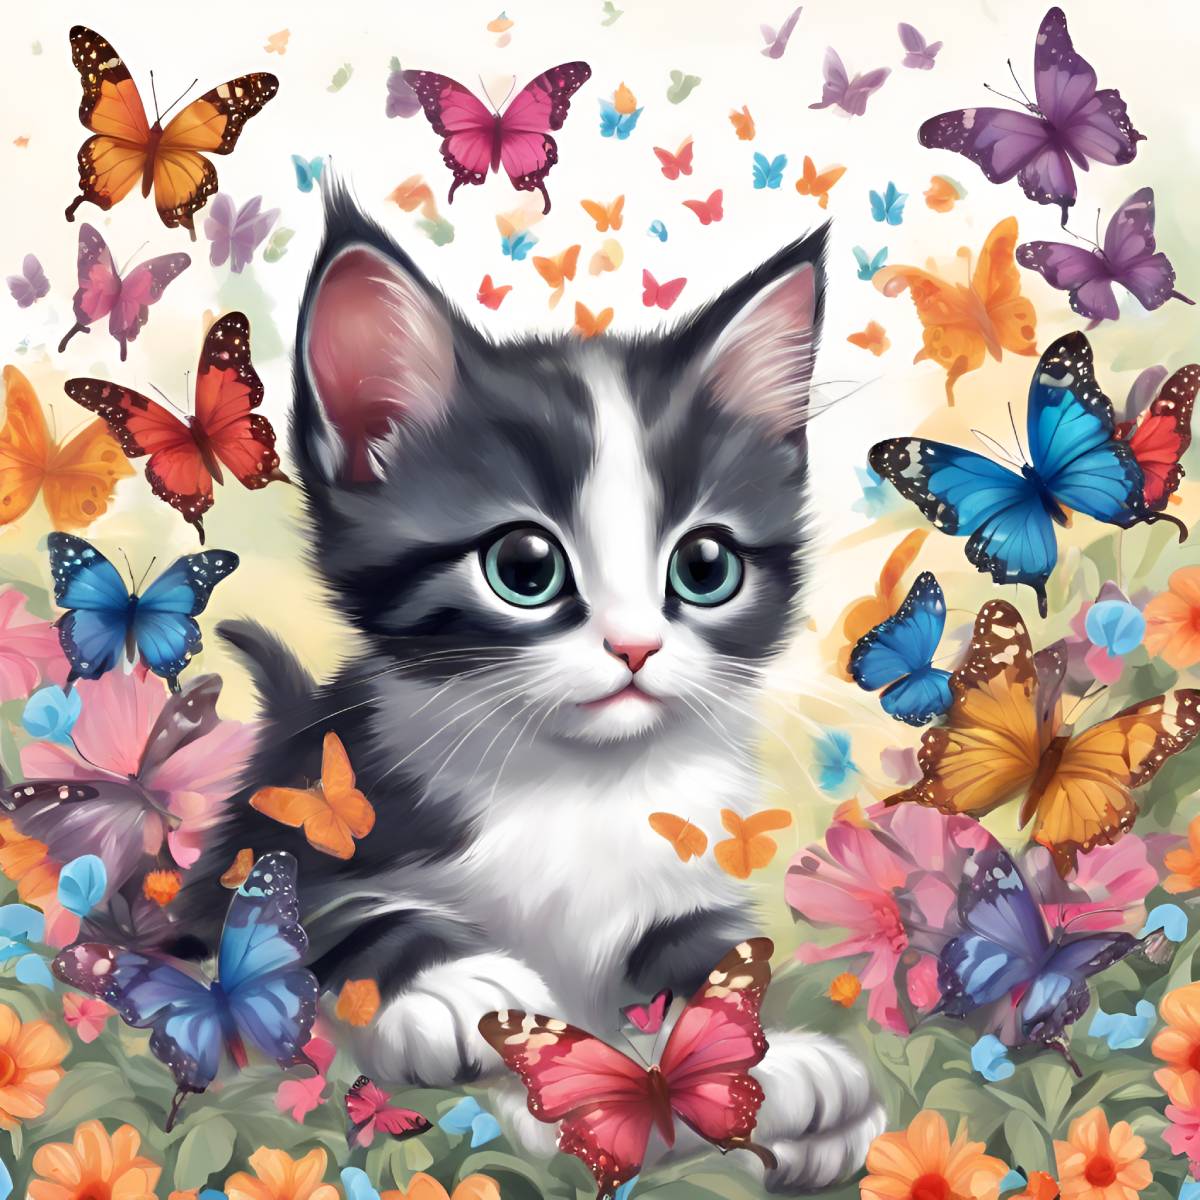 diamanten-wizard-diamond-painting-kits-Animals-Cat-Kitten-and-Butterfly-Friends-original.jpg